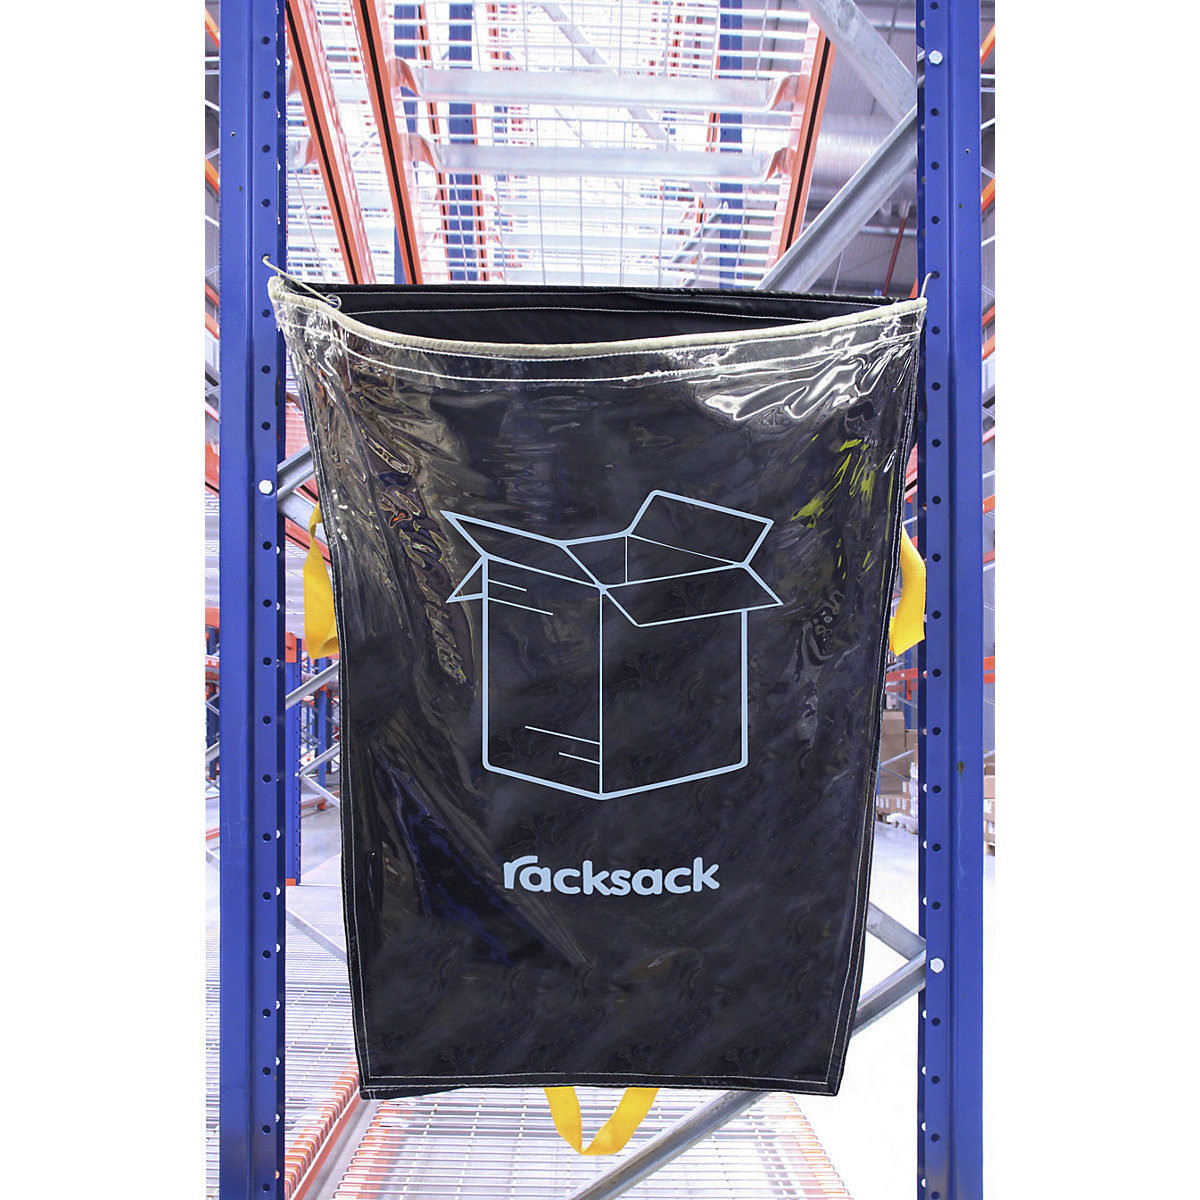 Racksack®, Volumen 160 l, Motiv Kartonagen, blau/transparent